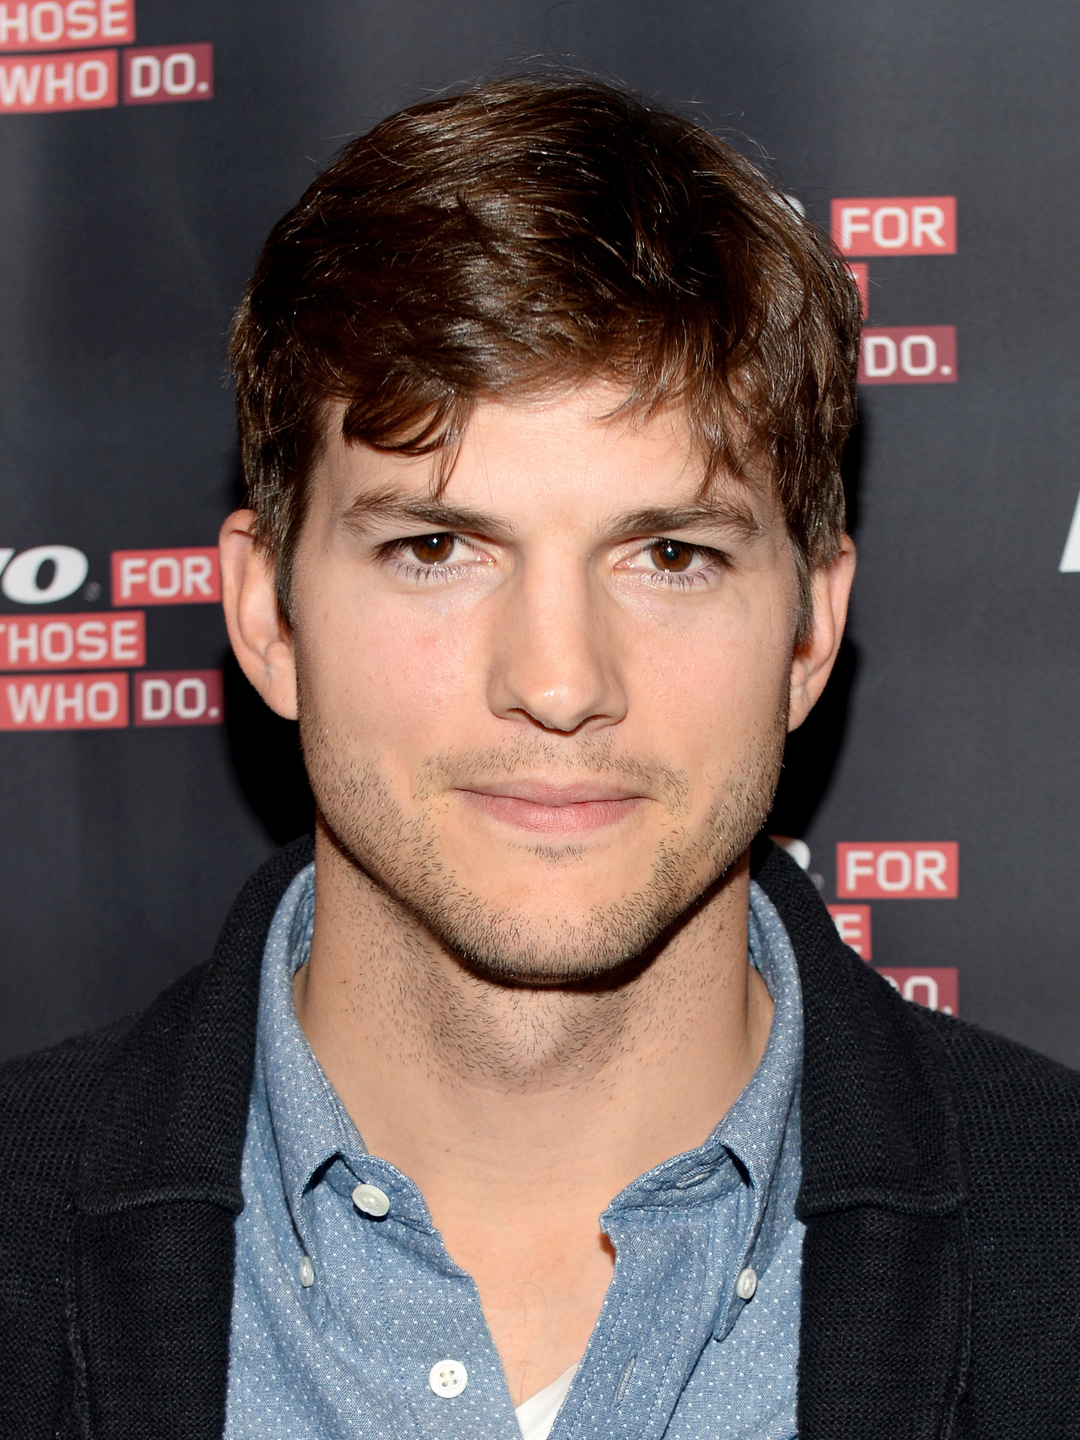 Ashton Kutcher appearance